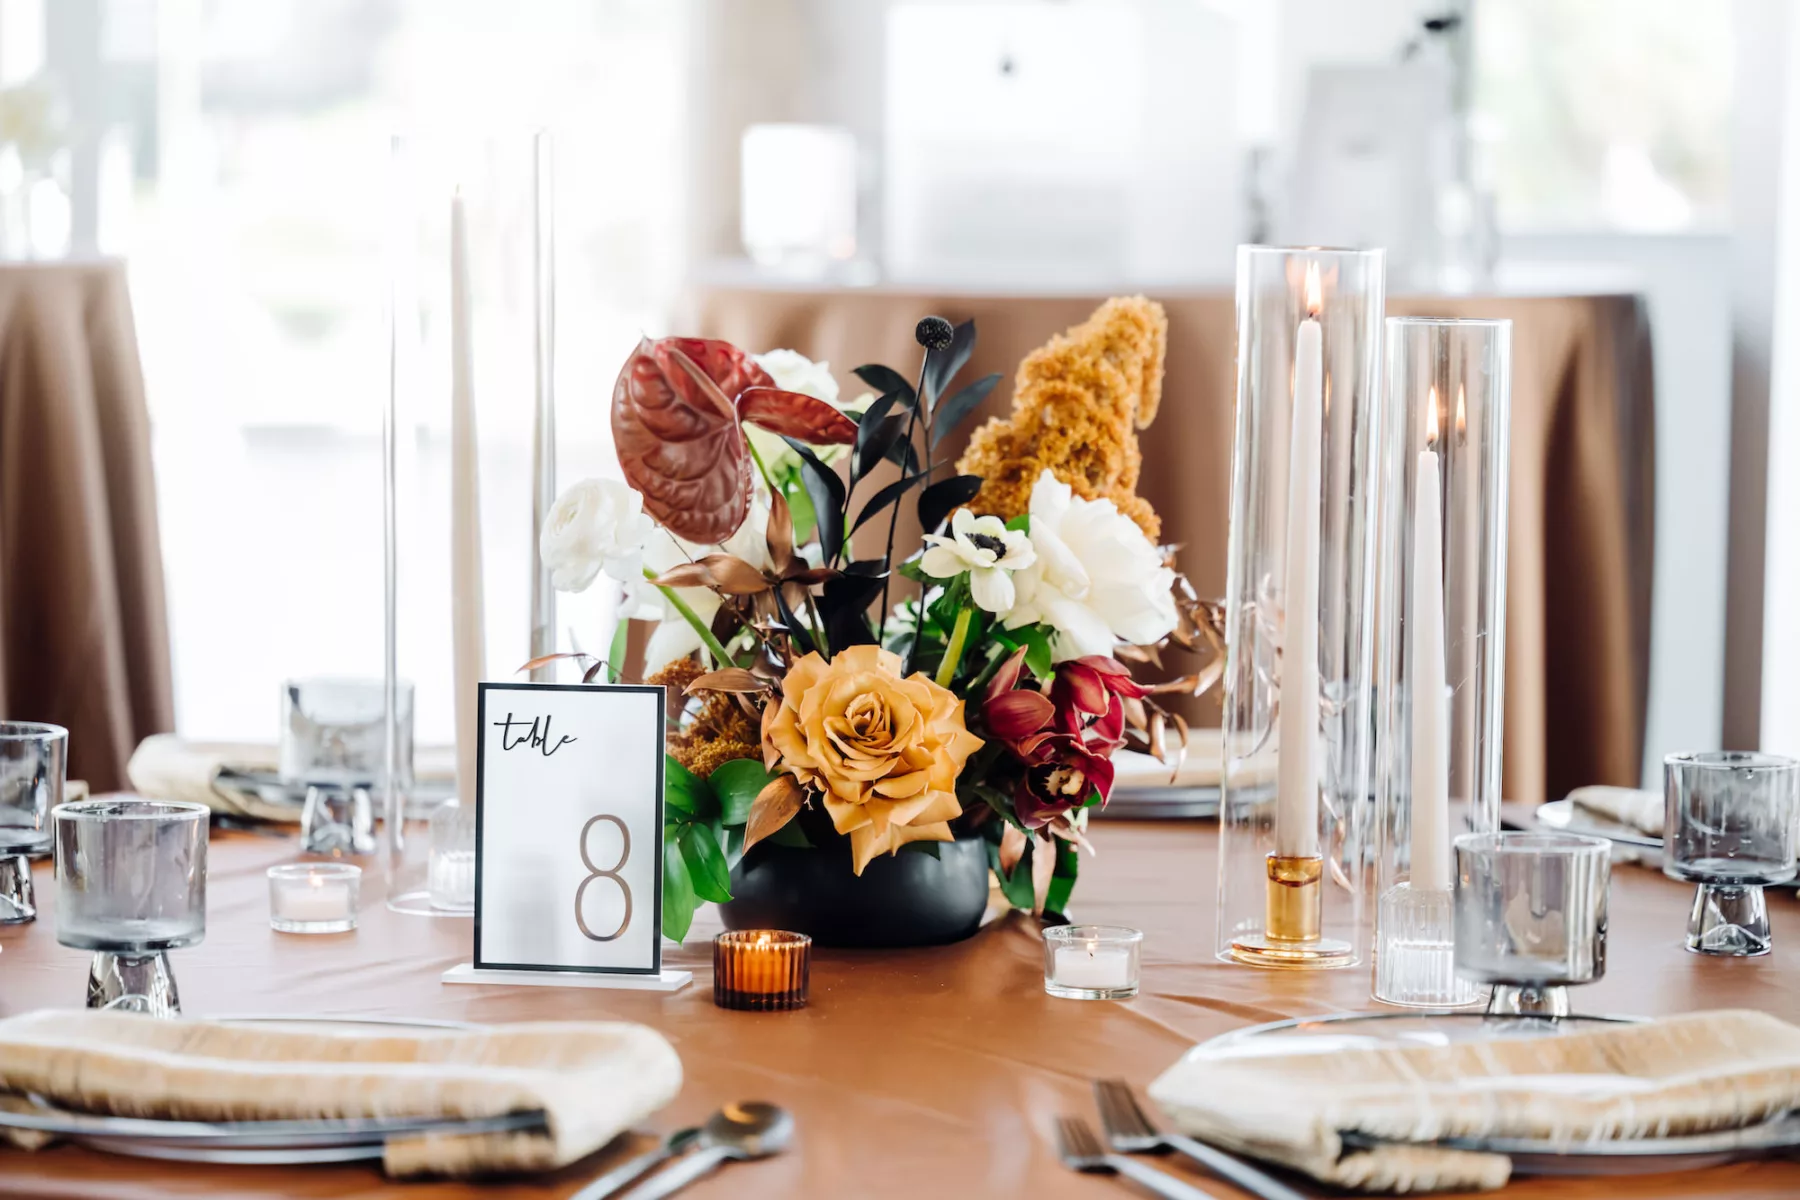 Modern Bronze Wedding Reception Centerpiece Inspiration | Brown Anthurium, Orange and White Roses, and Greenery Centerpiece Decor Ideas